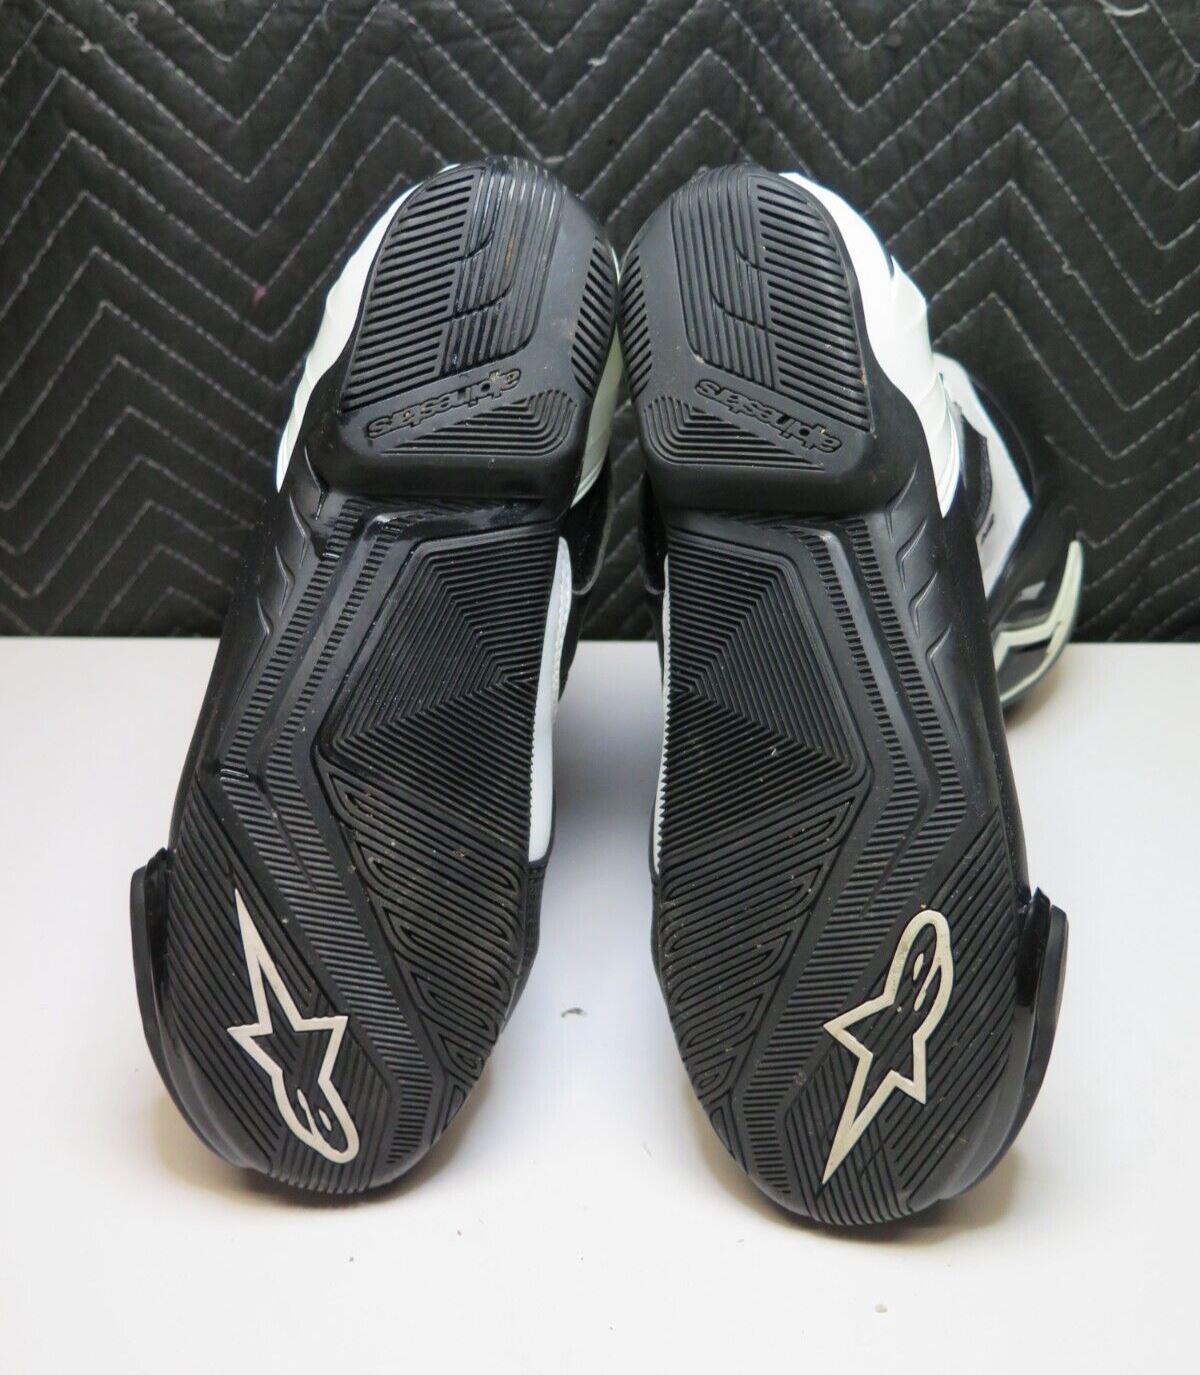 Alpinestars SMX S Men's Boots White/Black US Size 9.5 Euro 44 - Hardly worn